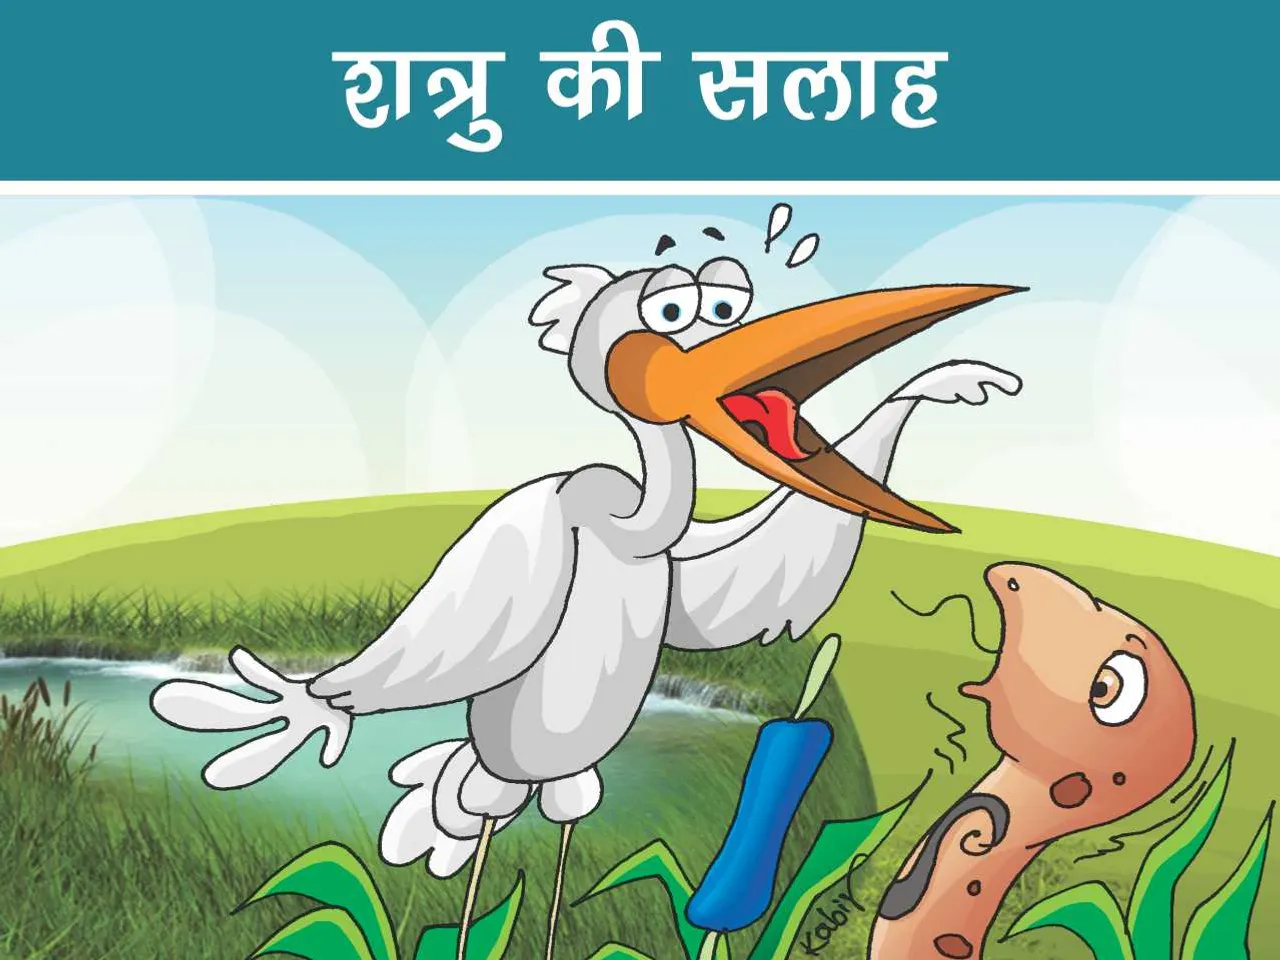 Heron and snake cartoon image